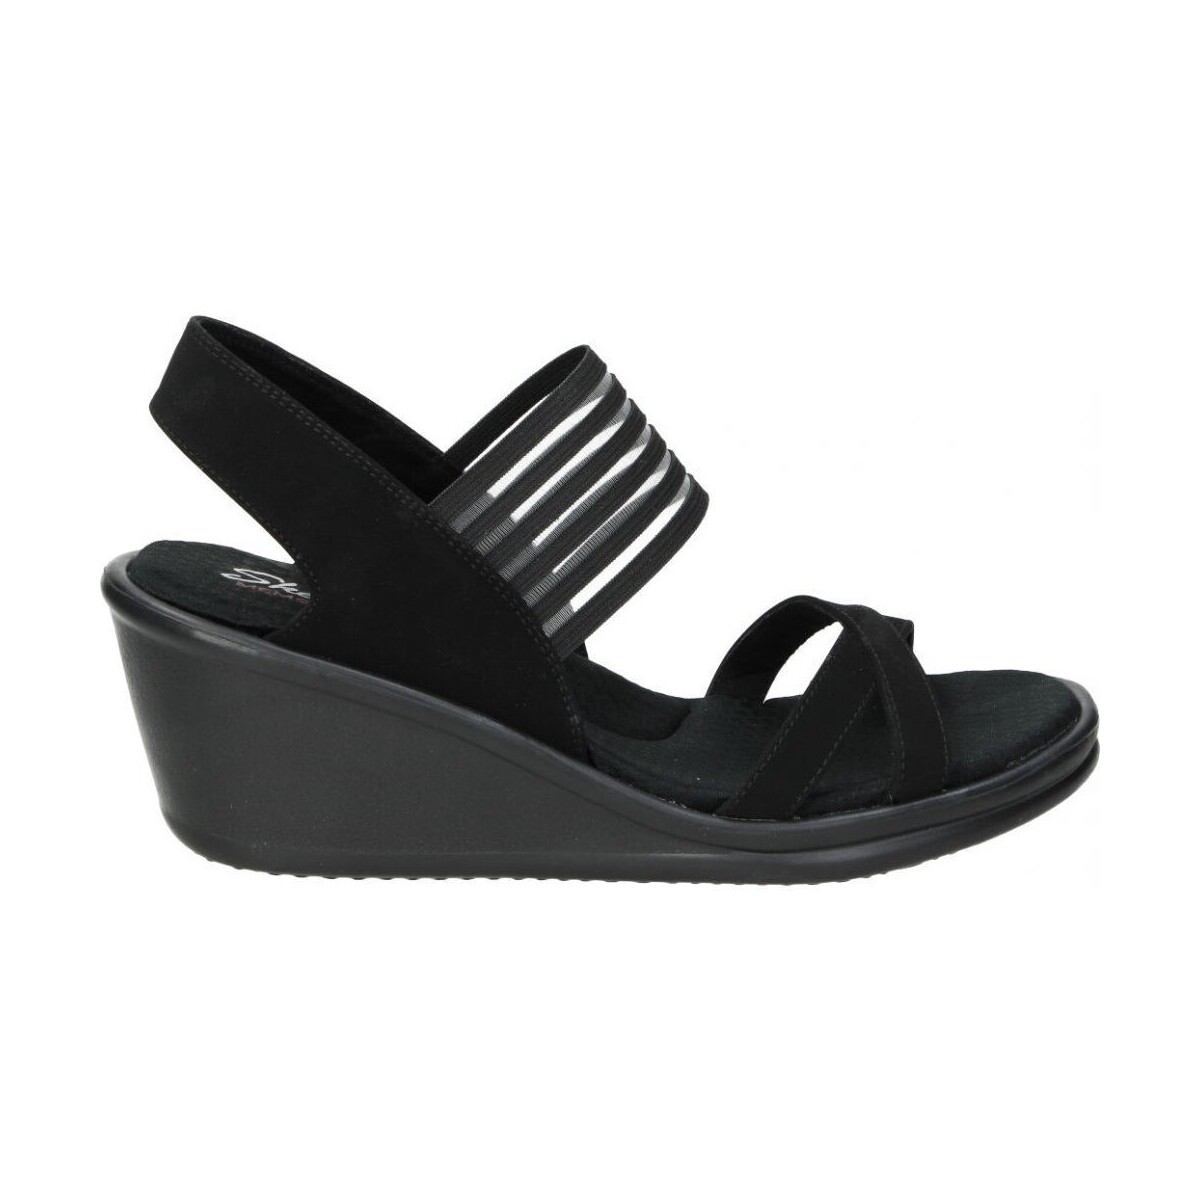 Zapatos Mujer Sandalias Skechers 31597-BBK Negro